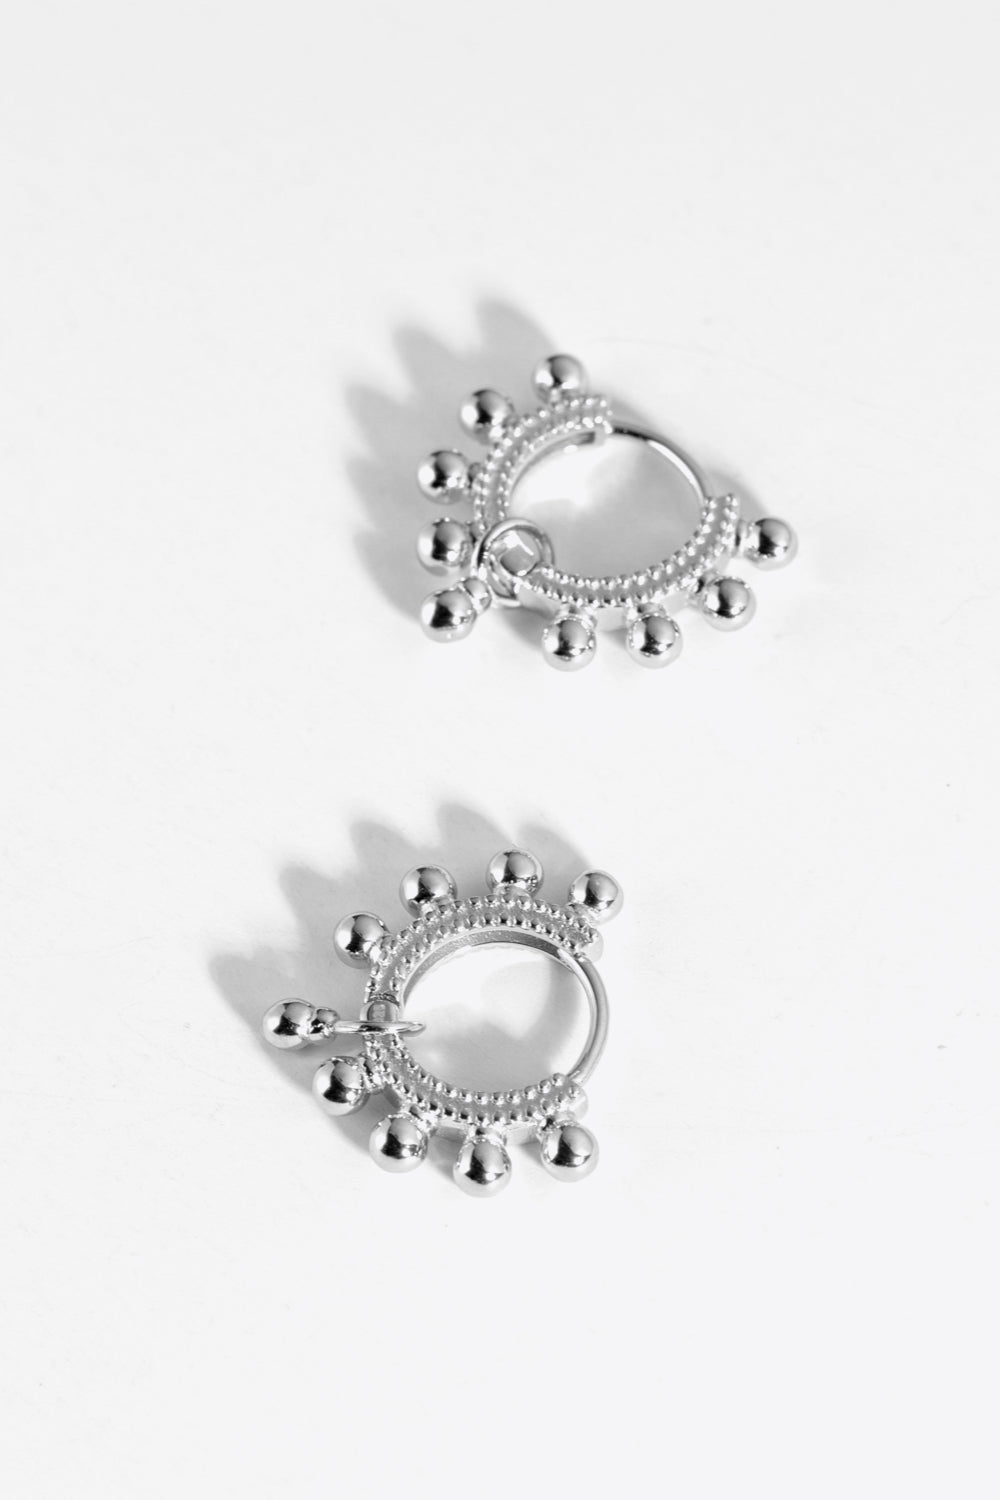 White Smoke 925 Sterling Silver Huggie Earrings Sentient Beauty Fashions jewelry